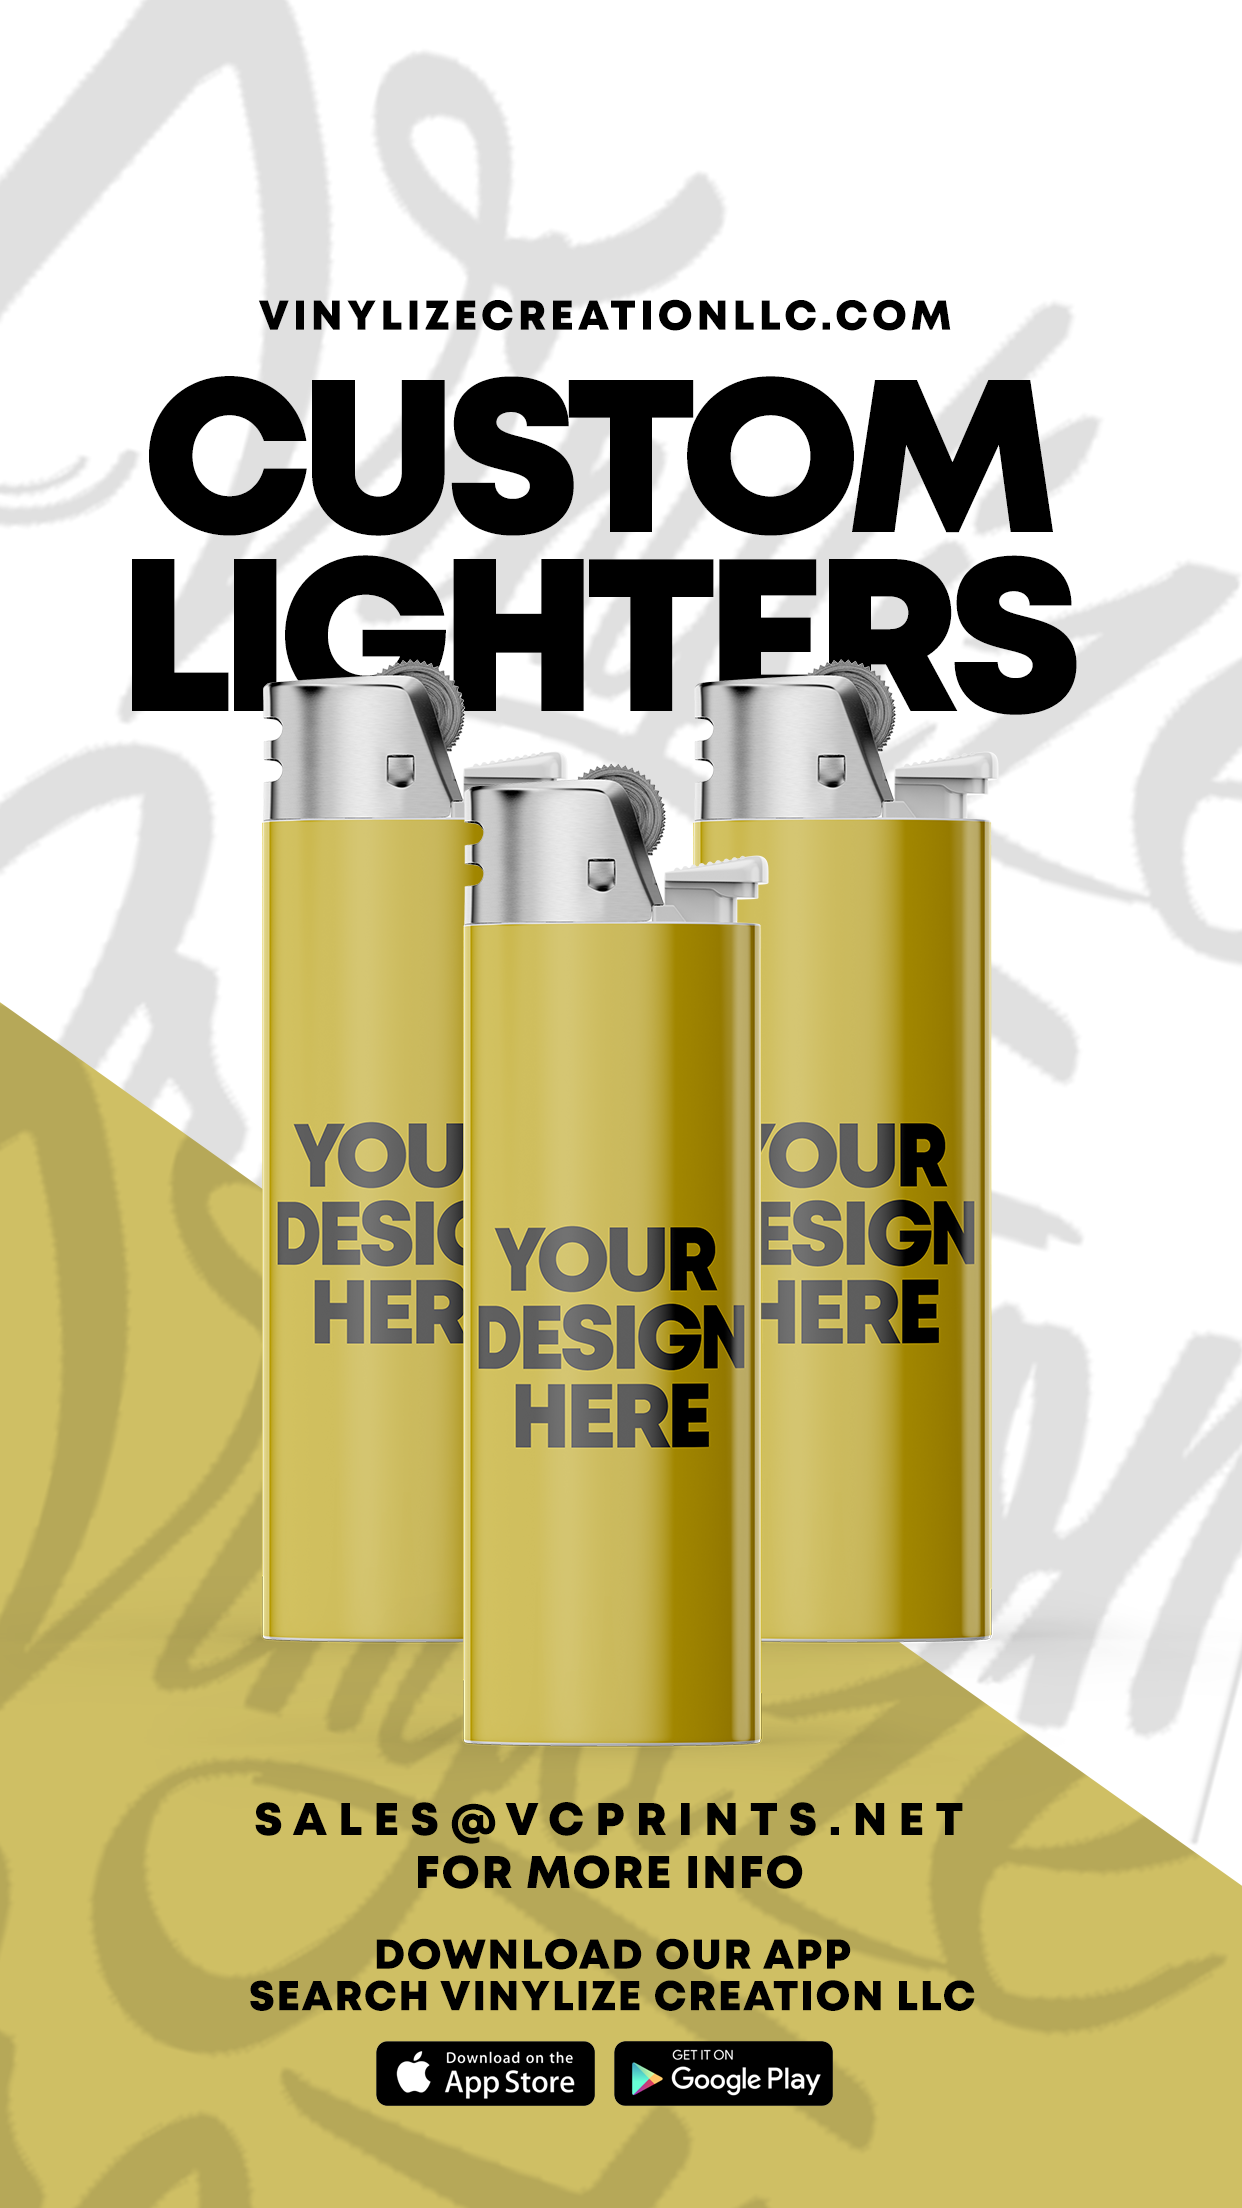 Custom BIC Lighter, BIC Lighter